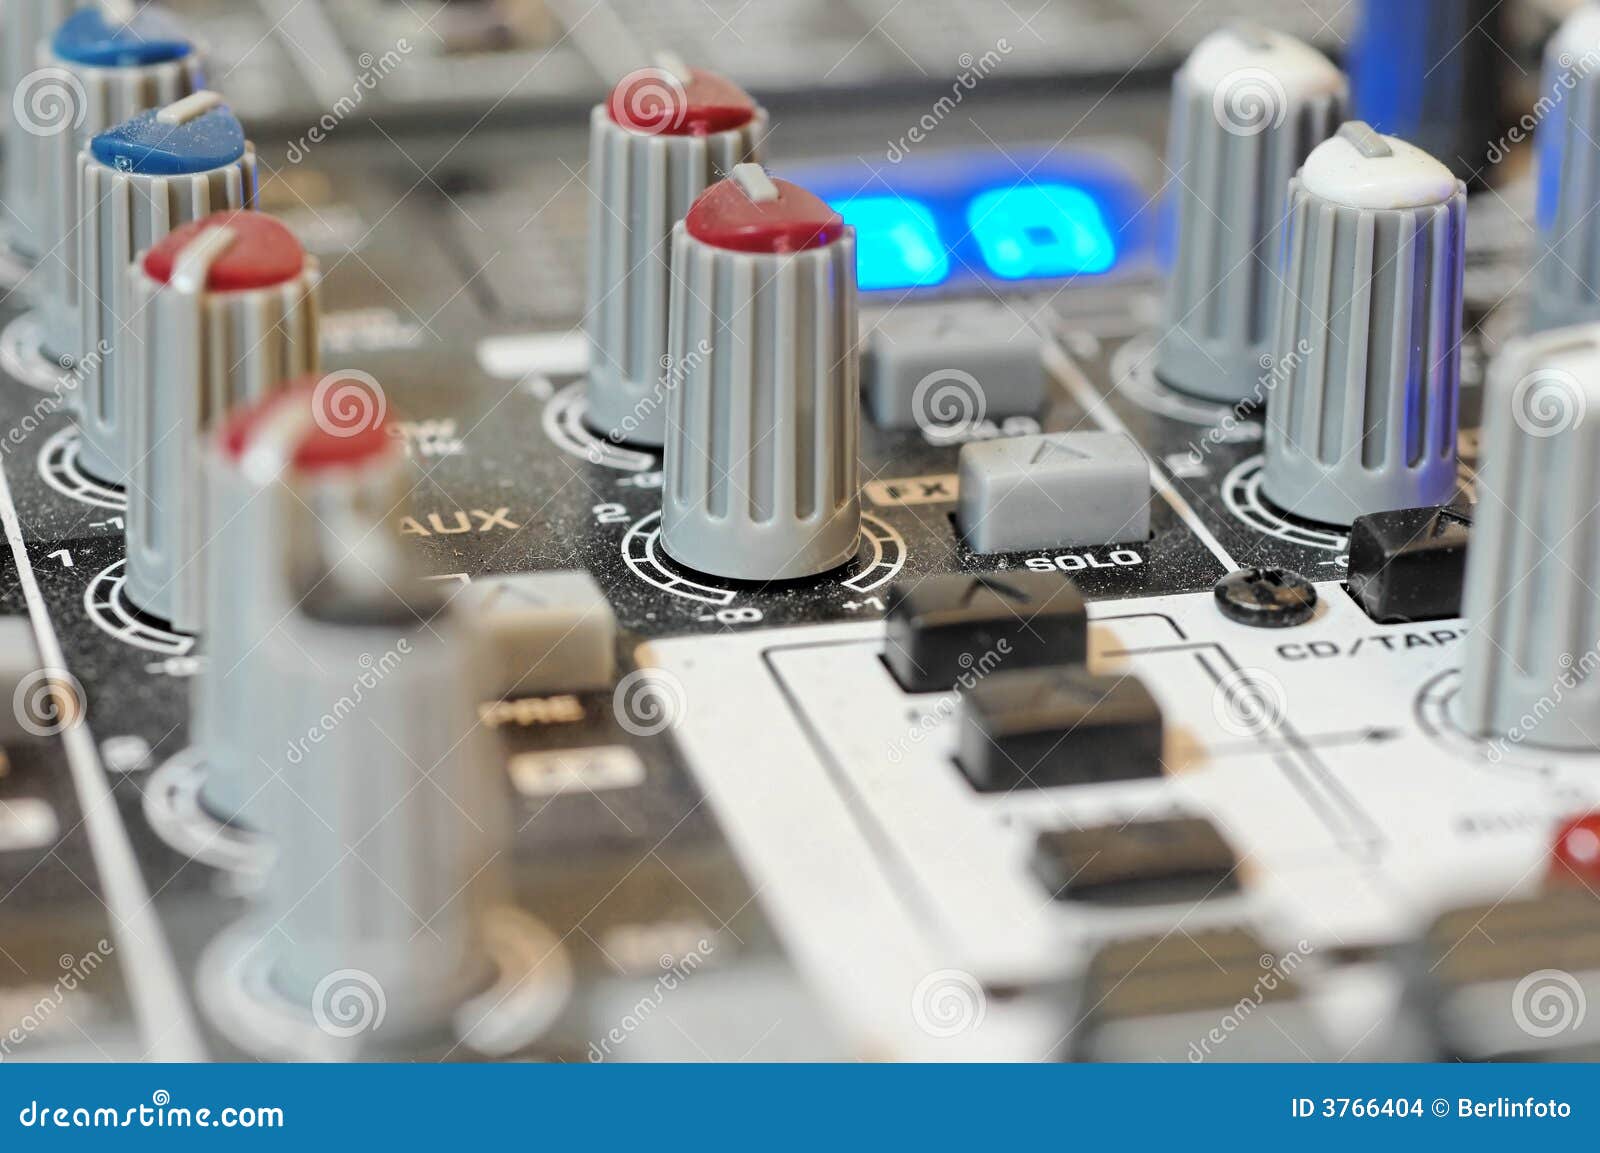 audio mixer board knobs